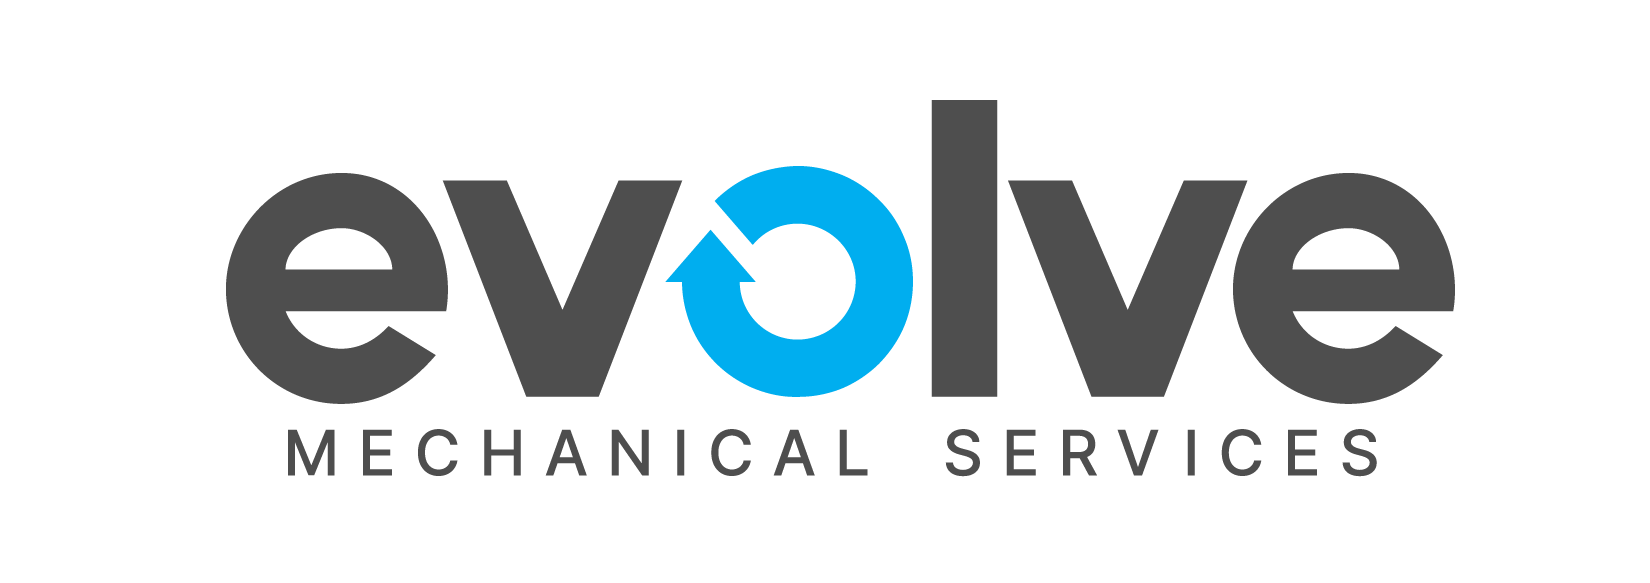 Evolve Mechanical Services Logo